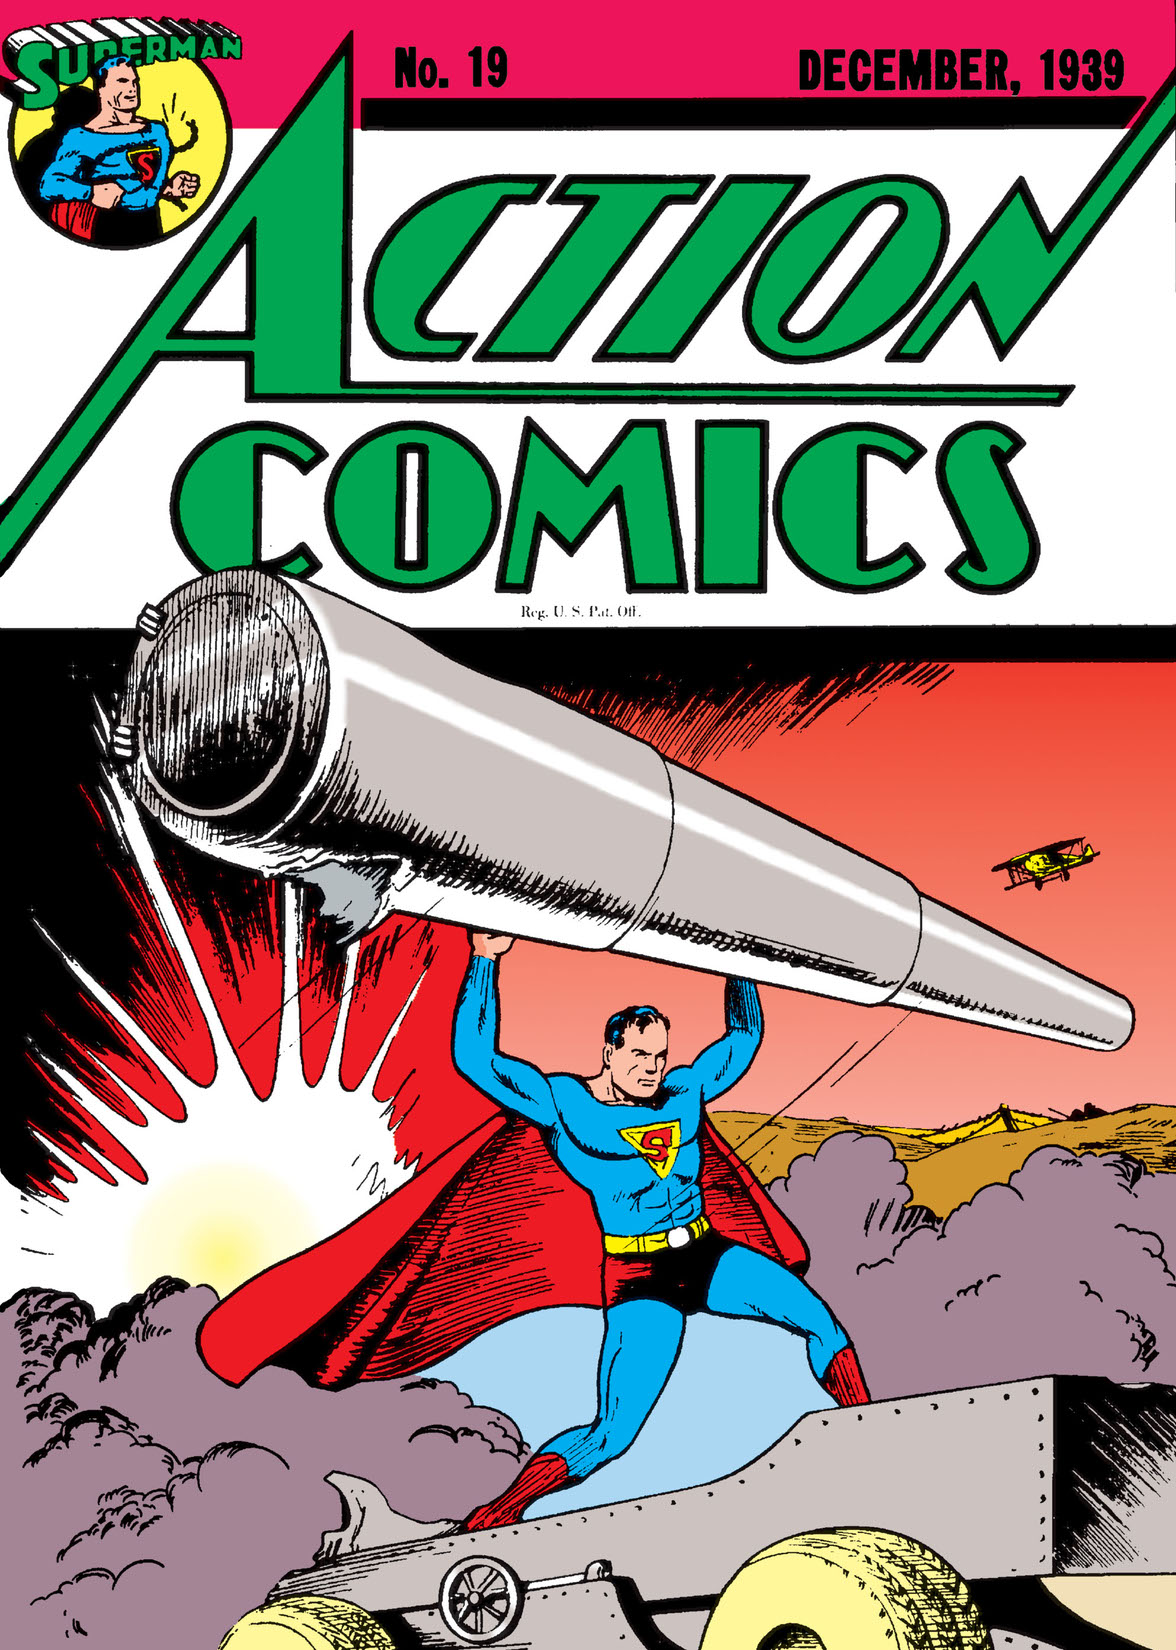 Action Comics (1938-) #19 preview images